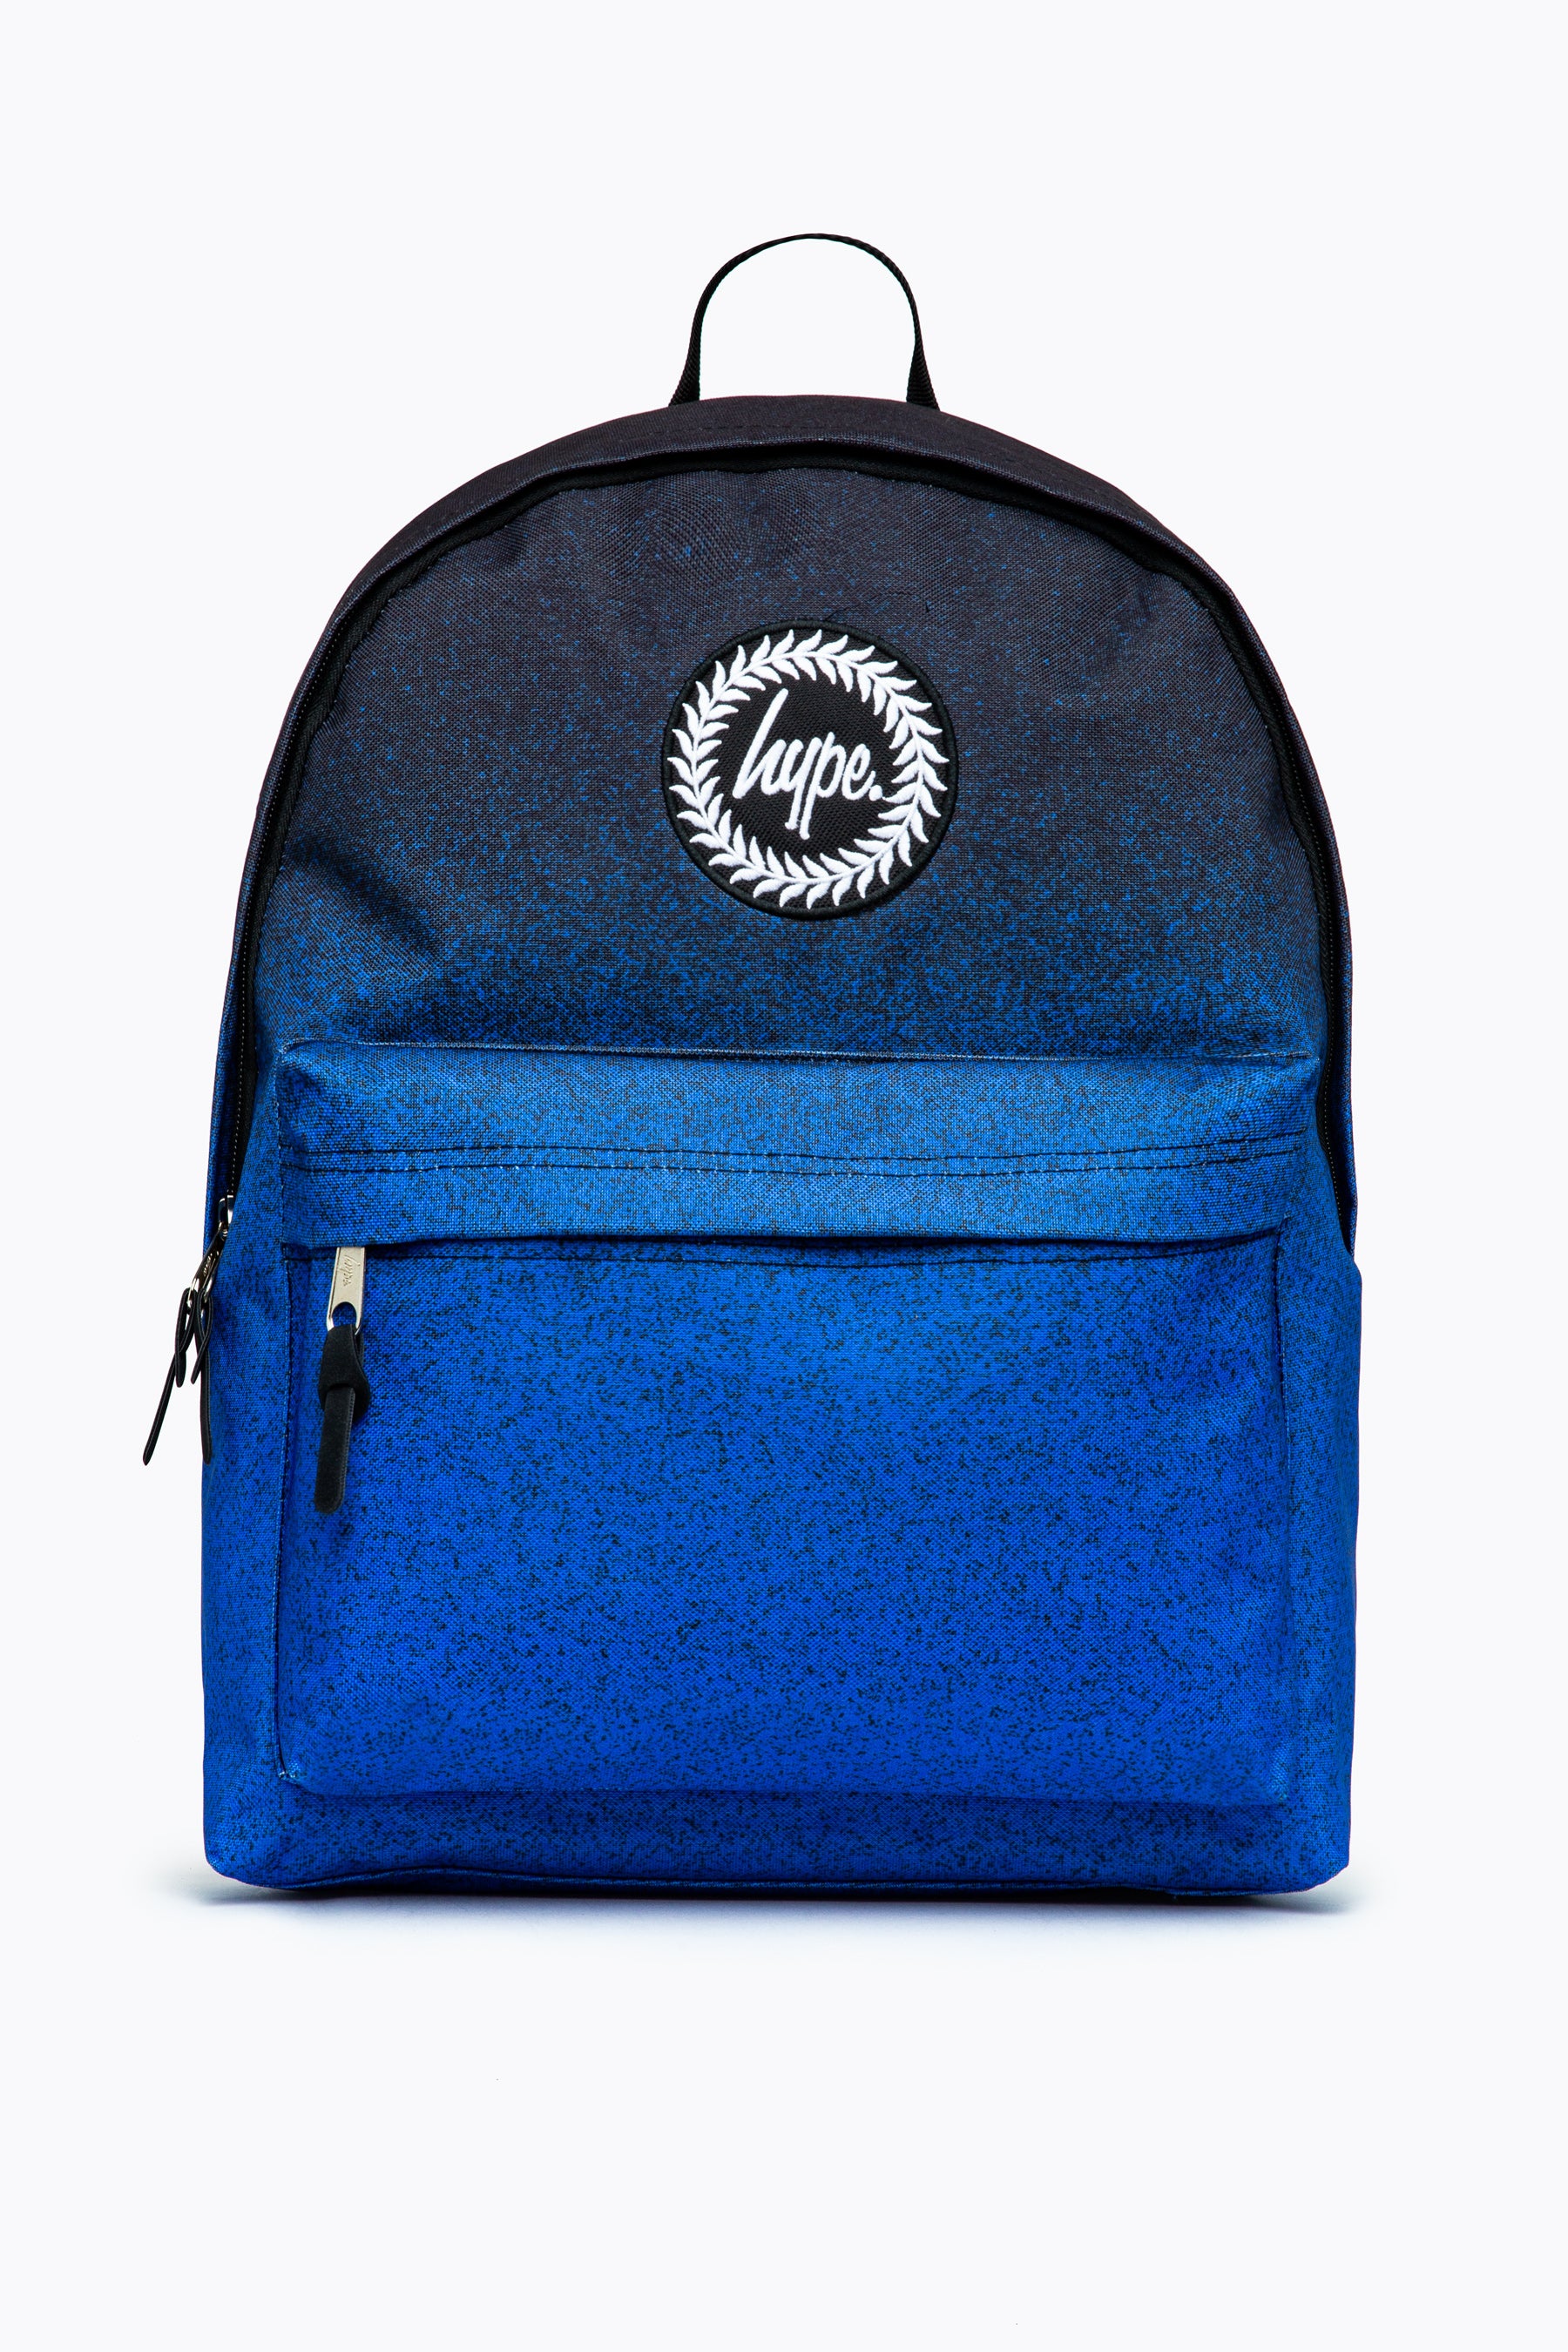 hype black blue speckle fade backpack